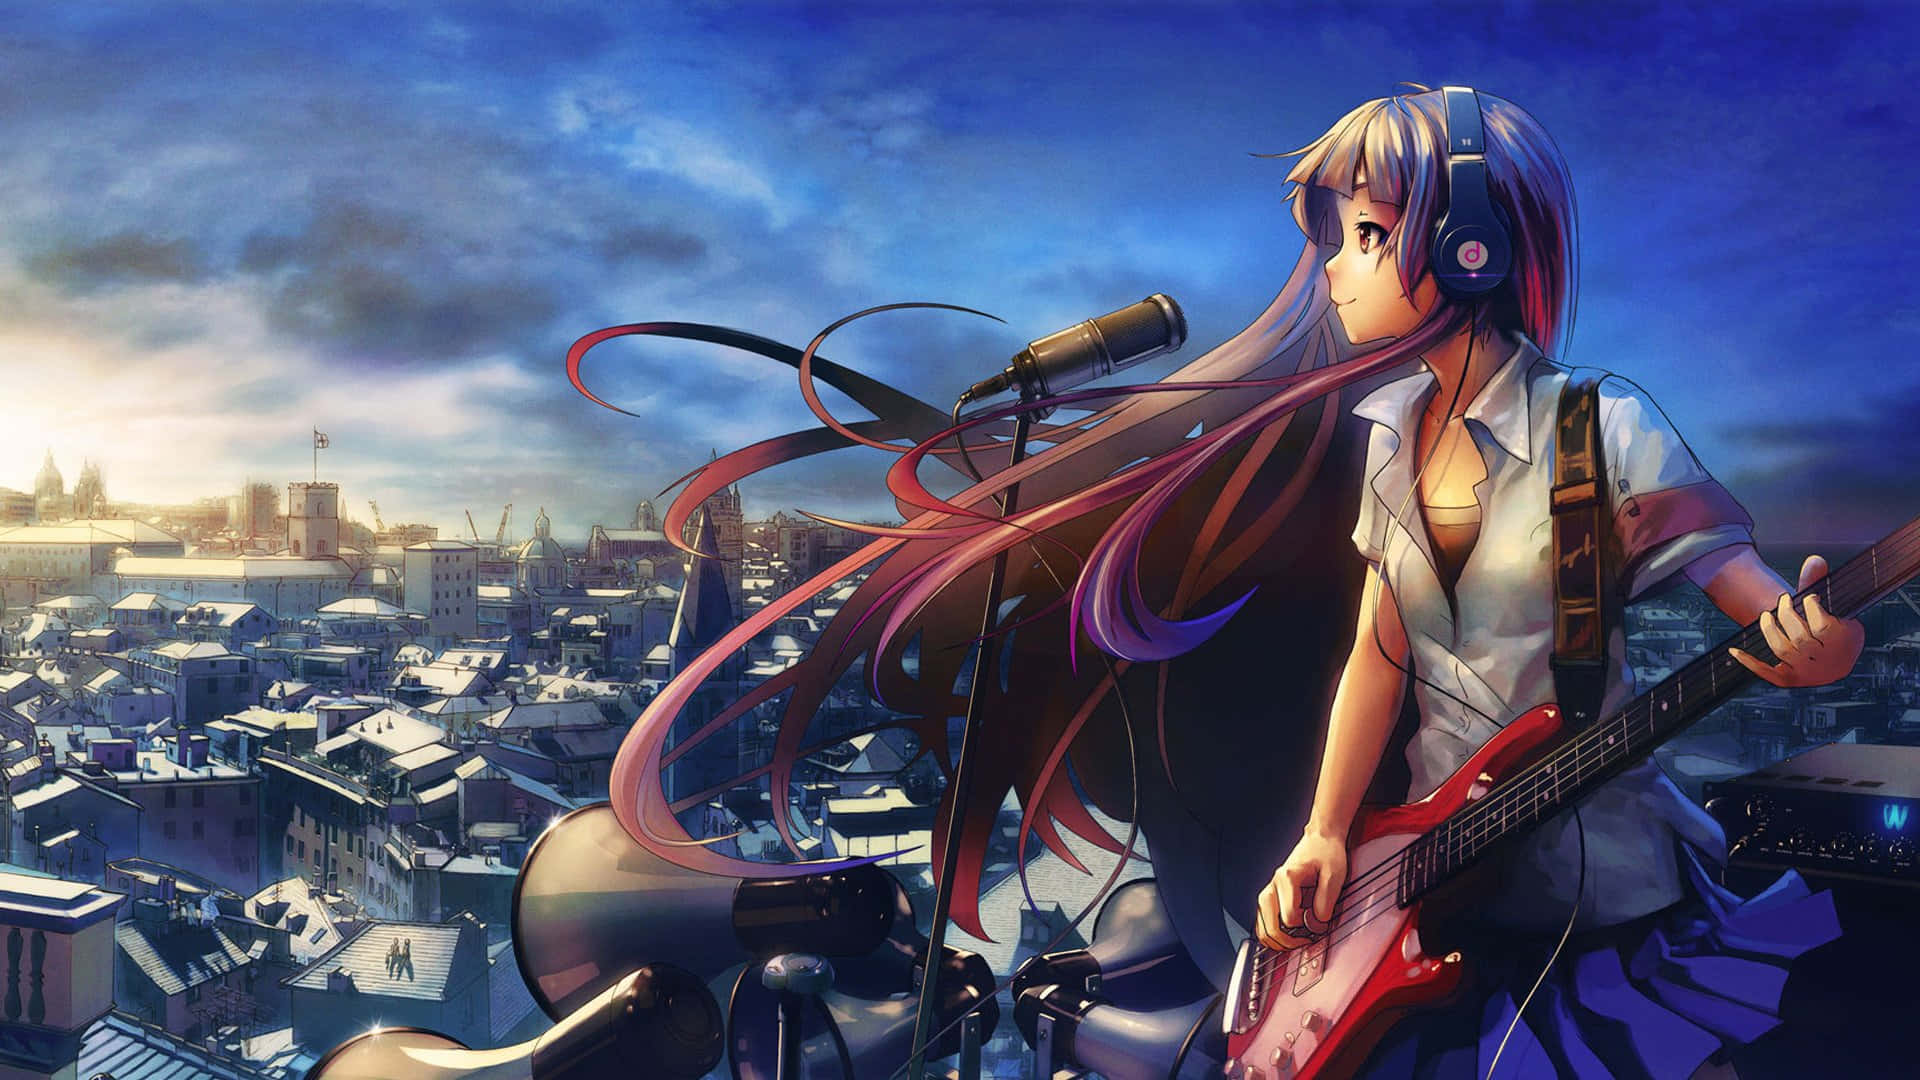 Download 1920x1080 Anime Girl Guitar Wallpaper 